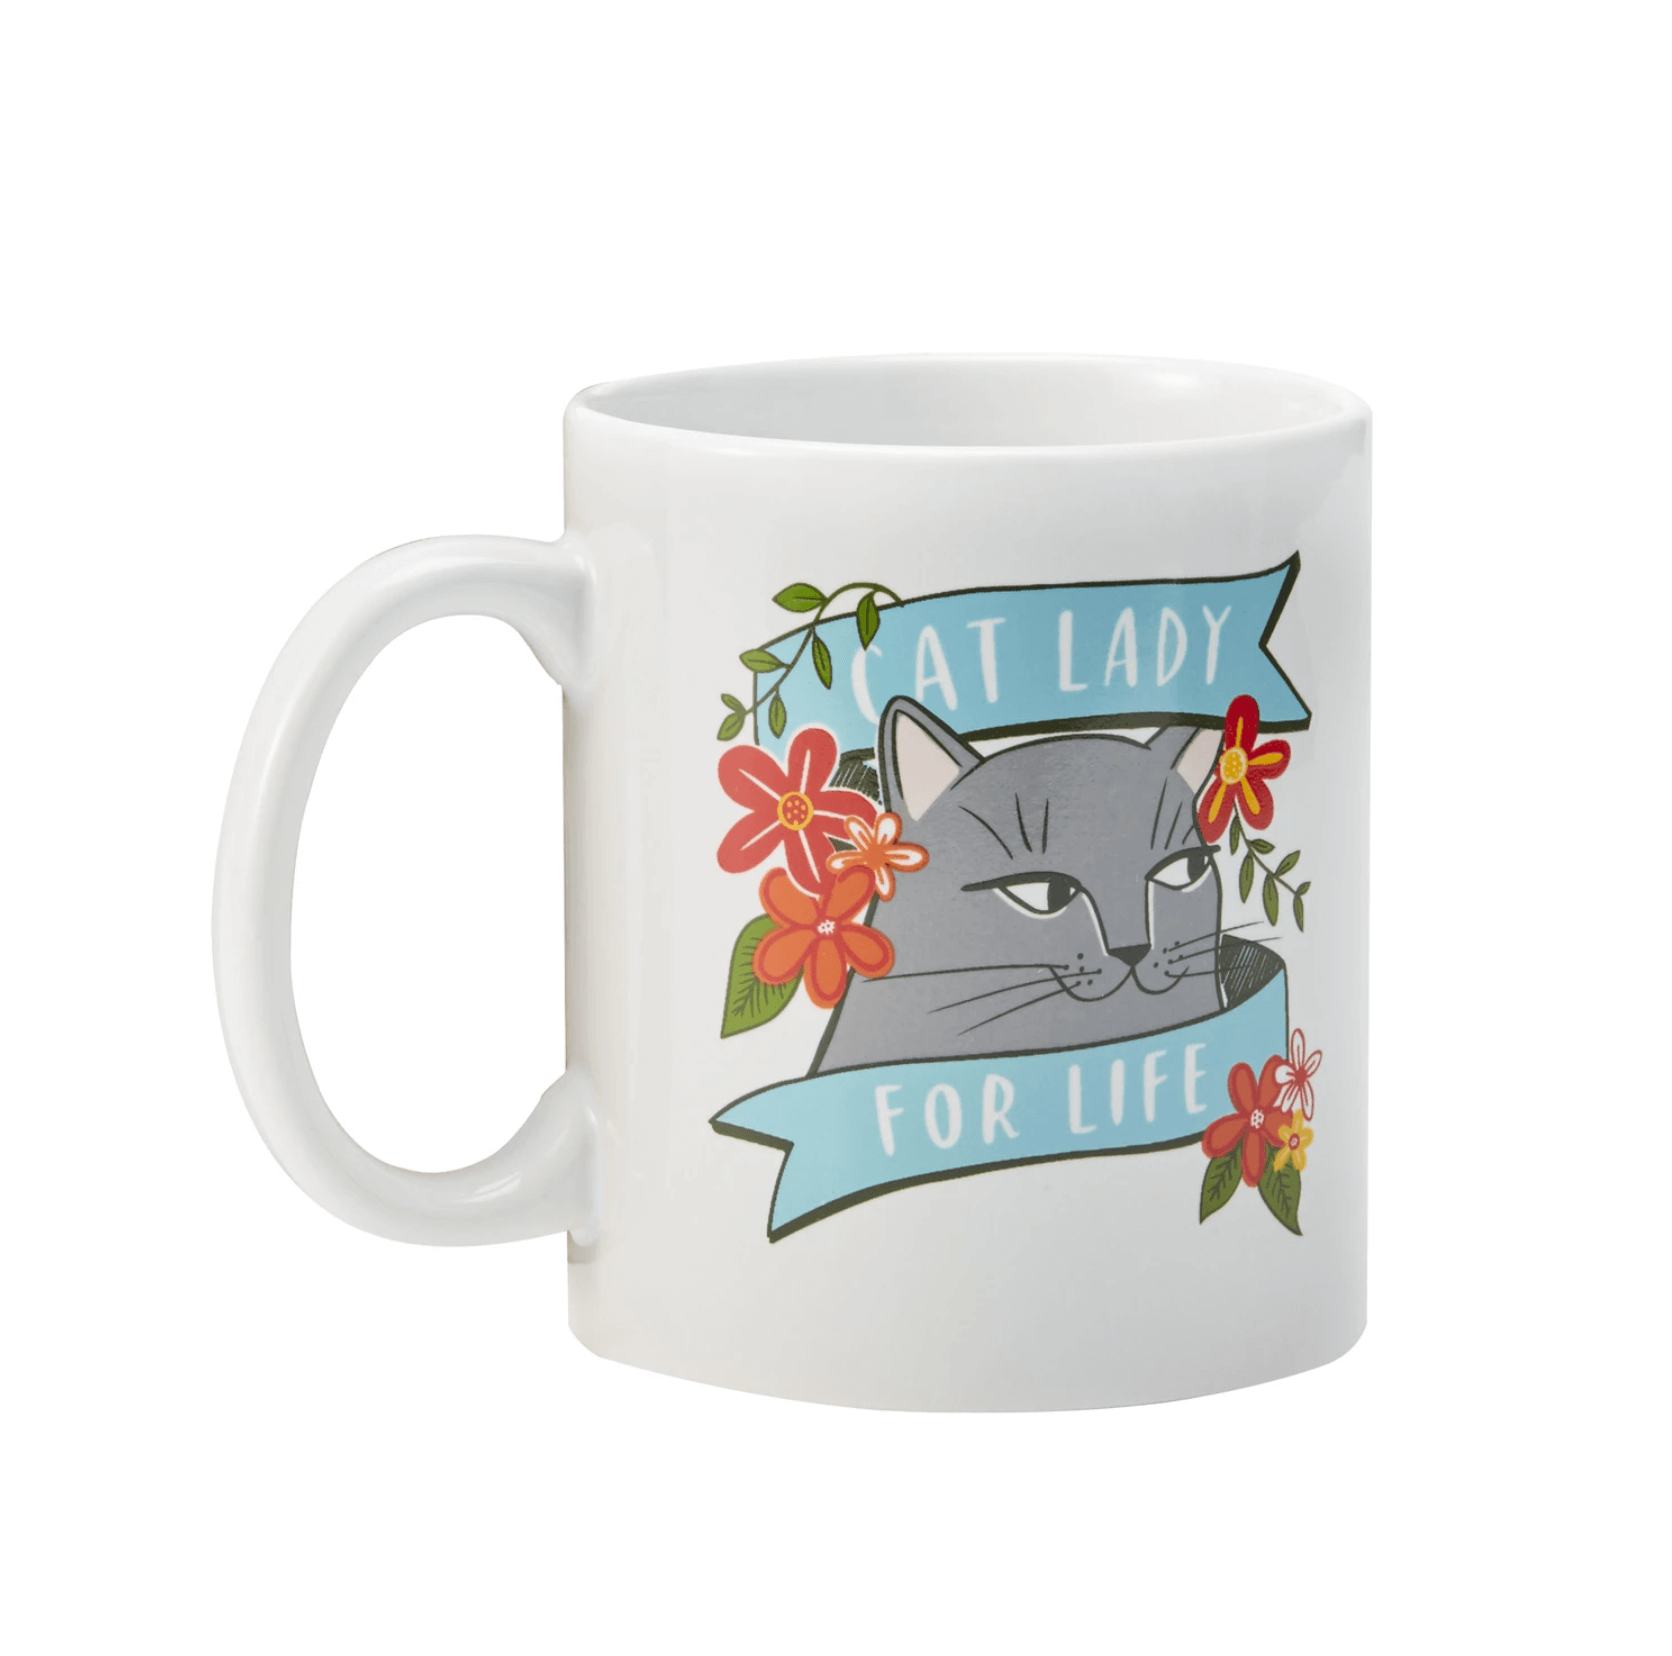 "Cat Lady for Life" - Mug